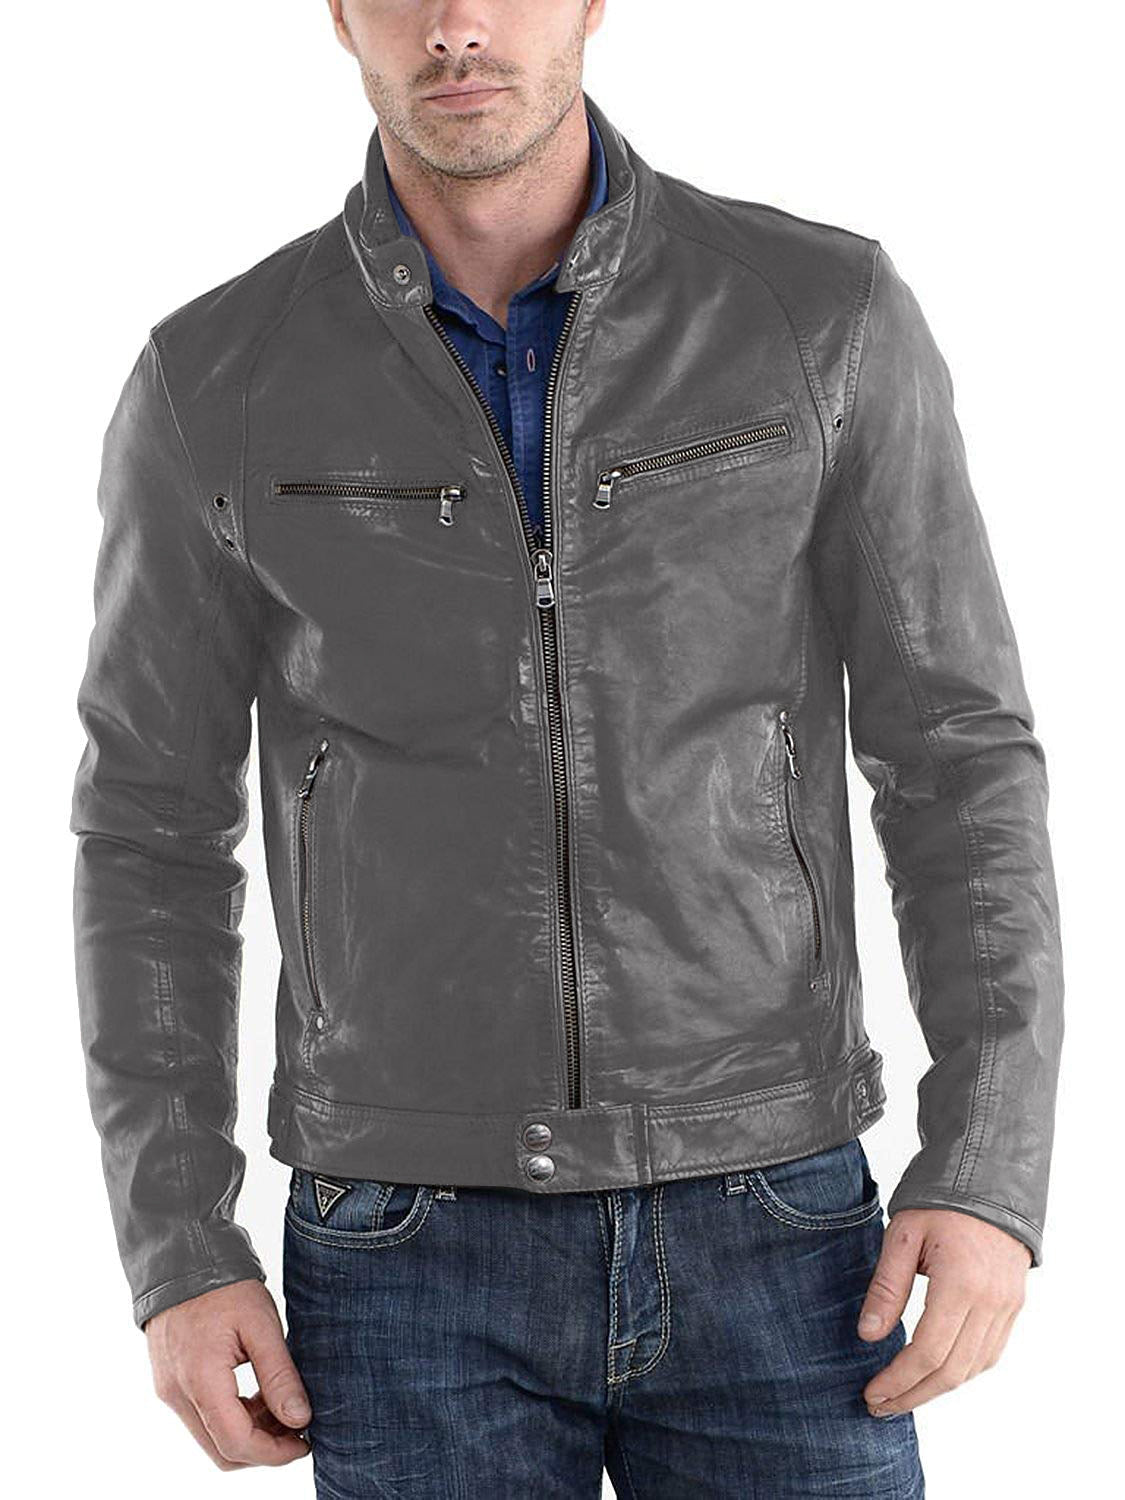 Leather Jackets Hub Mens Genuine Lambskin Leather Jacket (Black, Racer Jacket) - 1501233